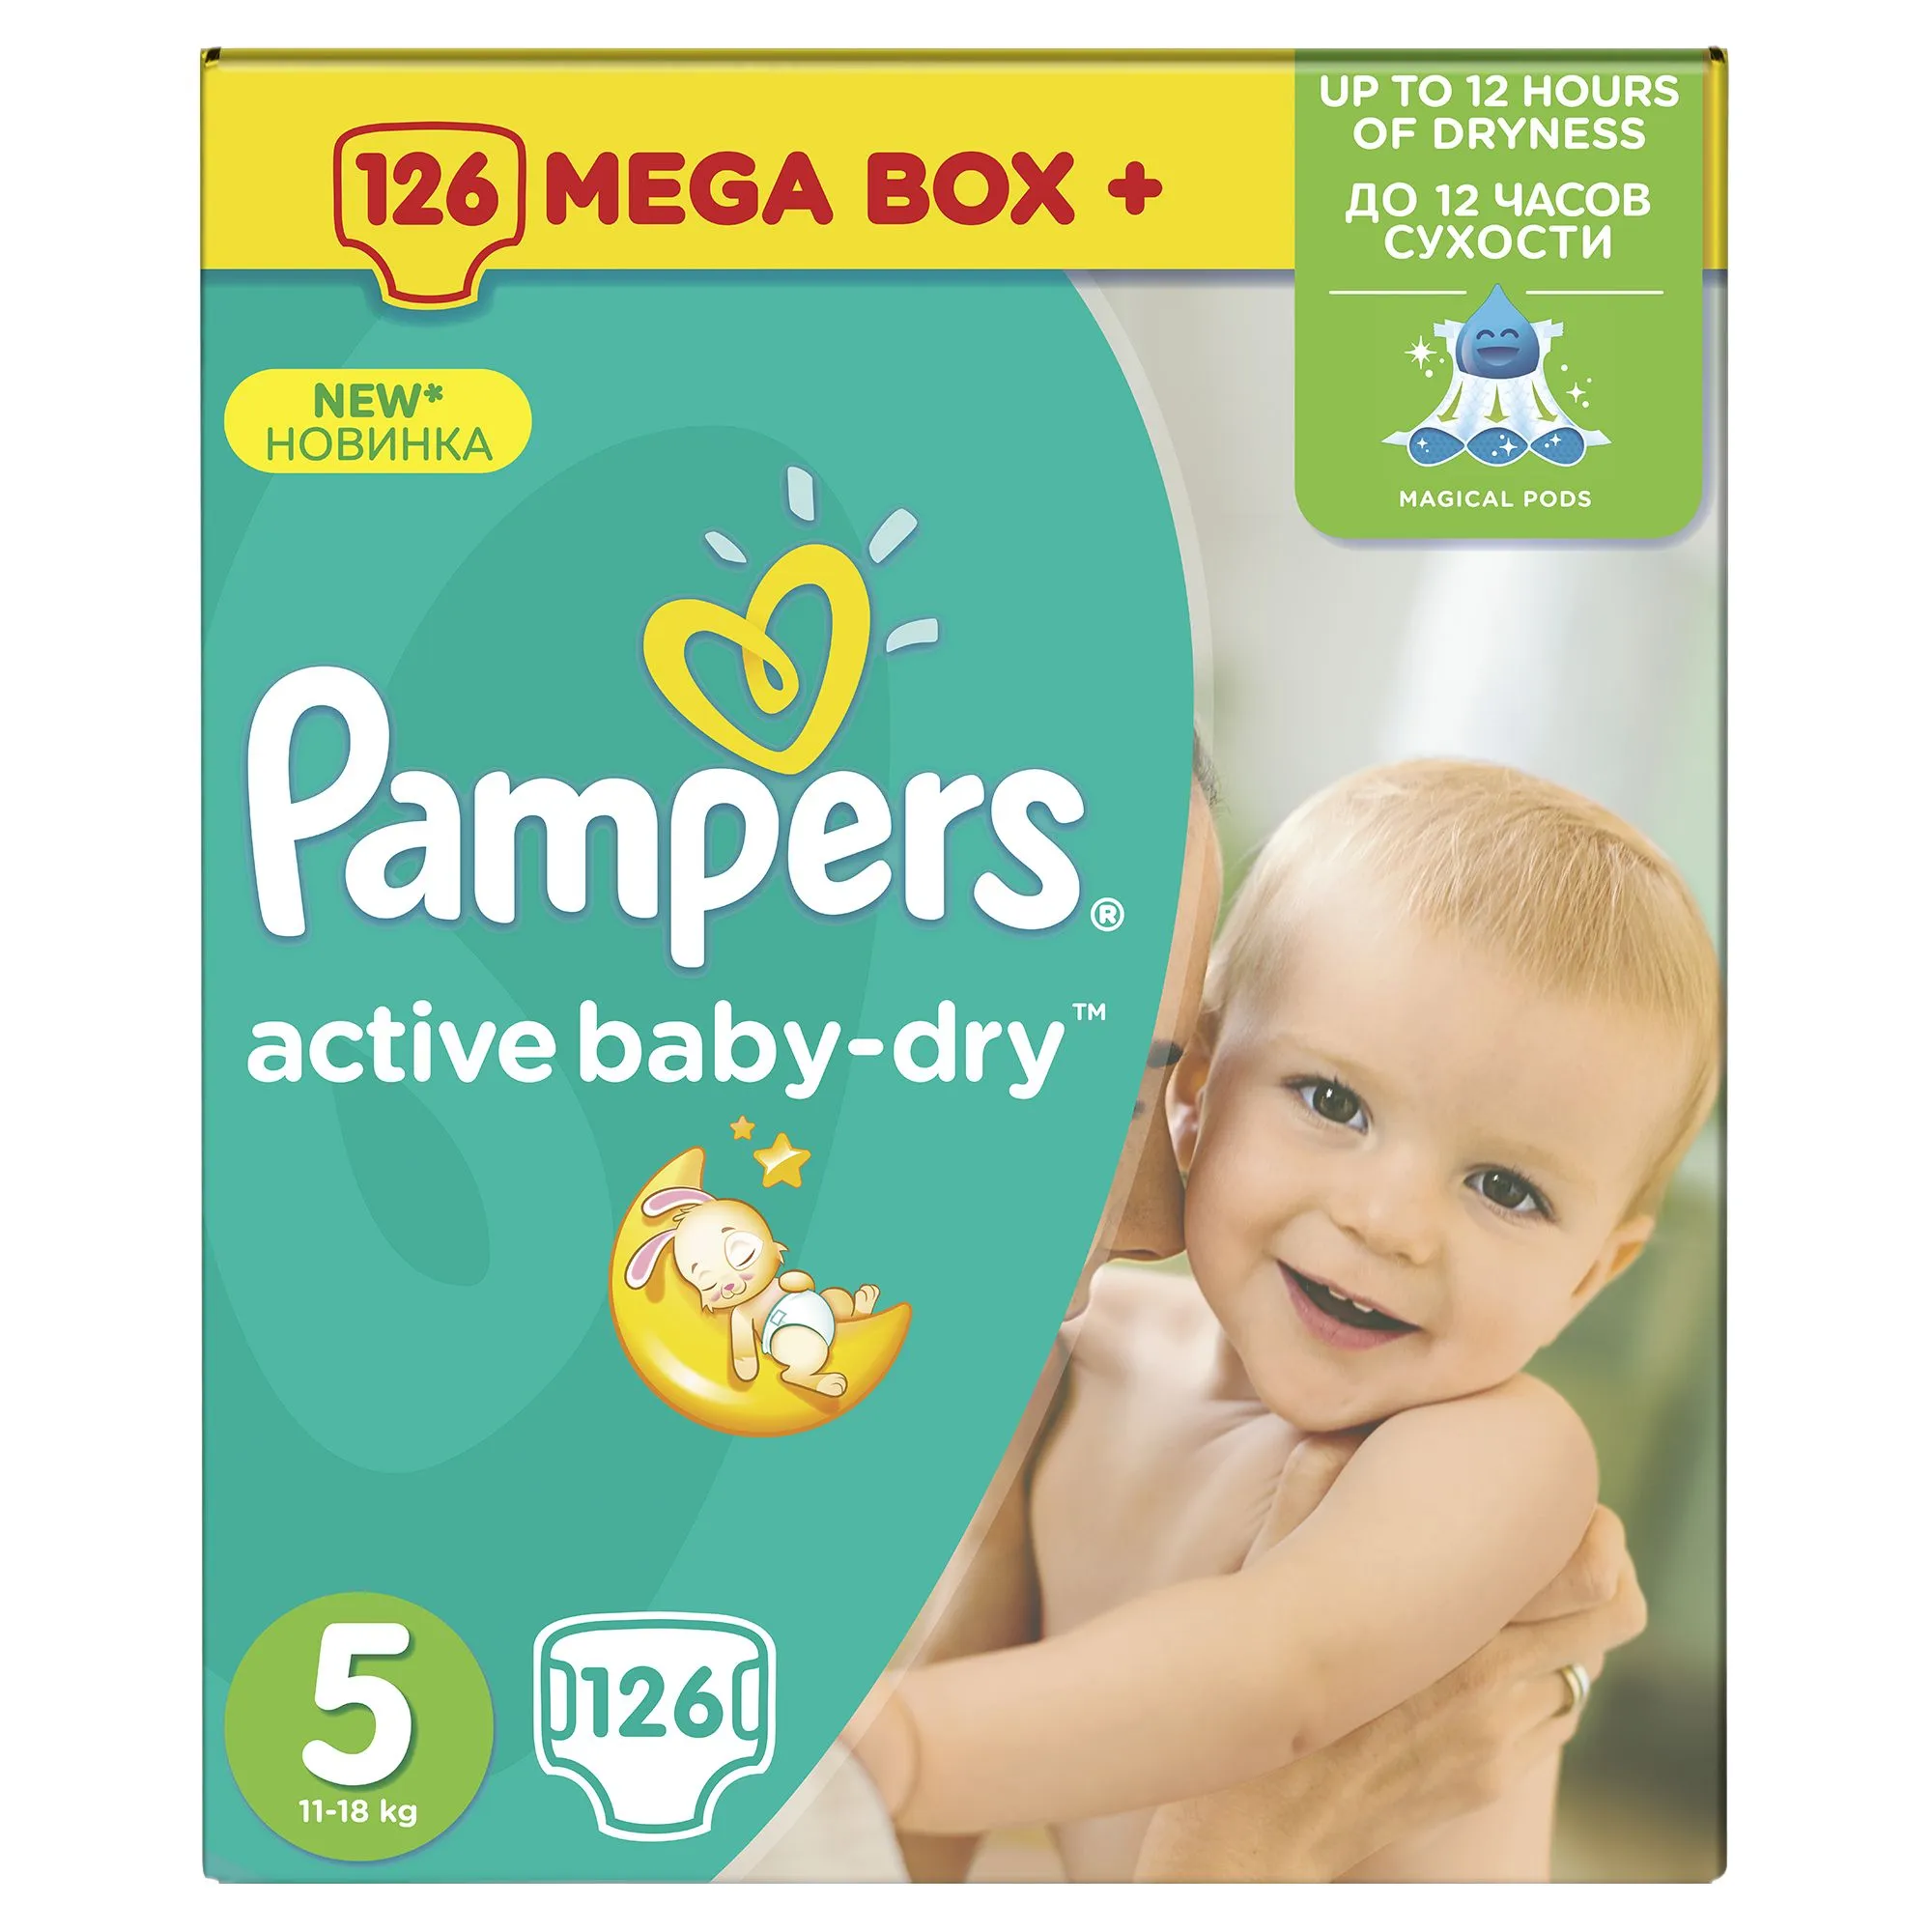 Pampers Active Baby-Dry dětské plenky velikost 5 Junior, 126ks